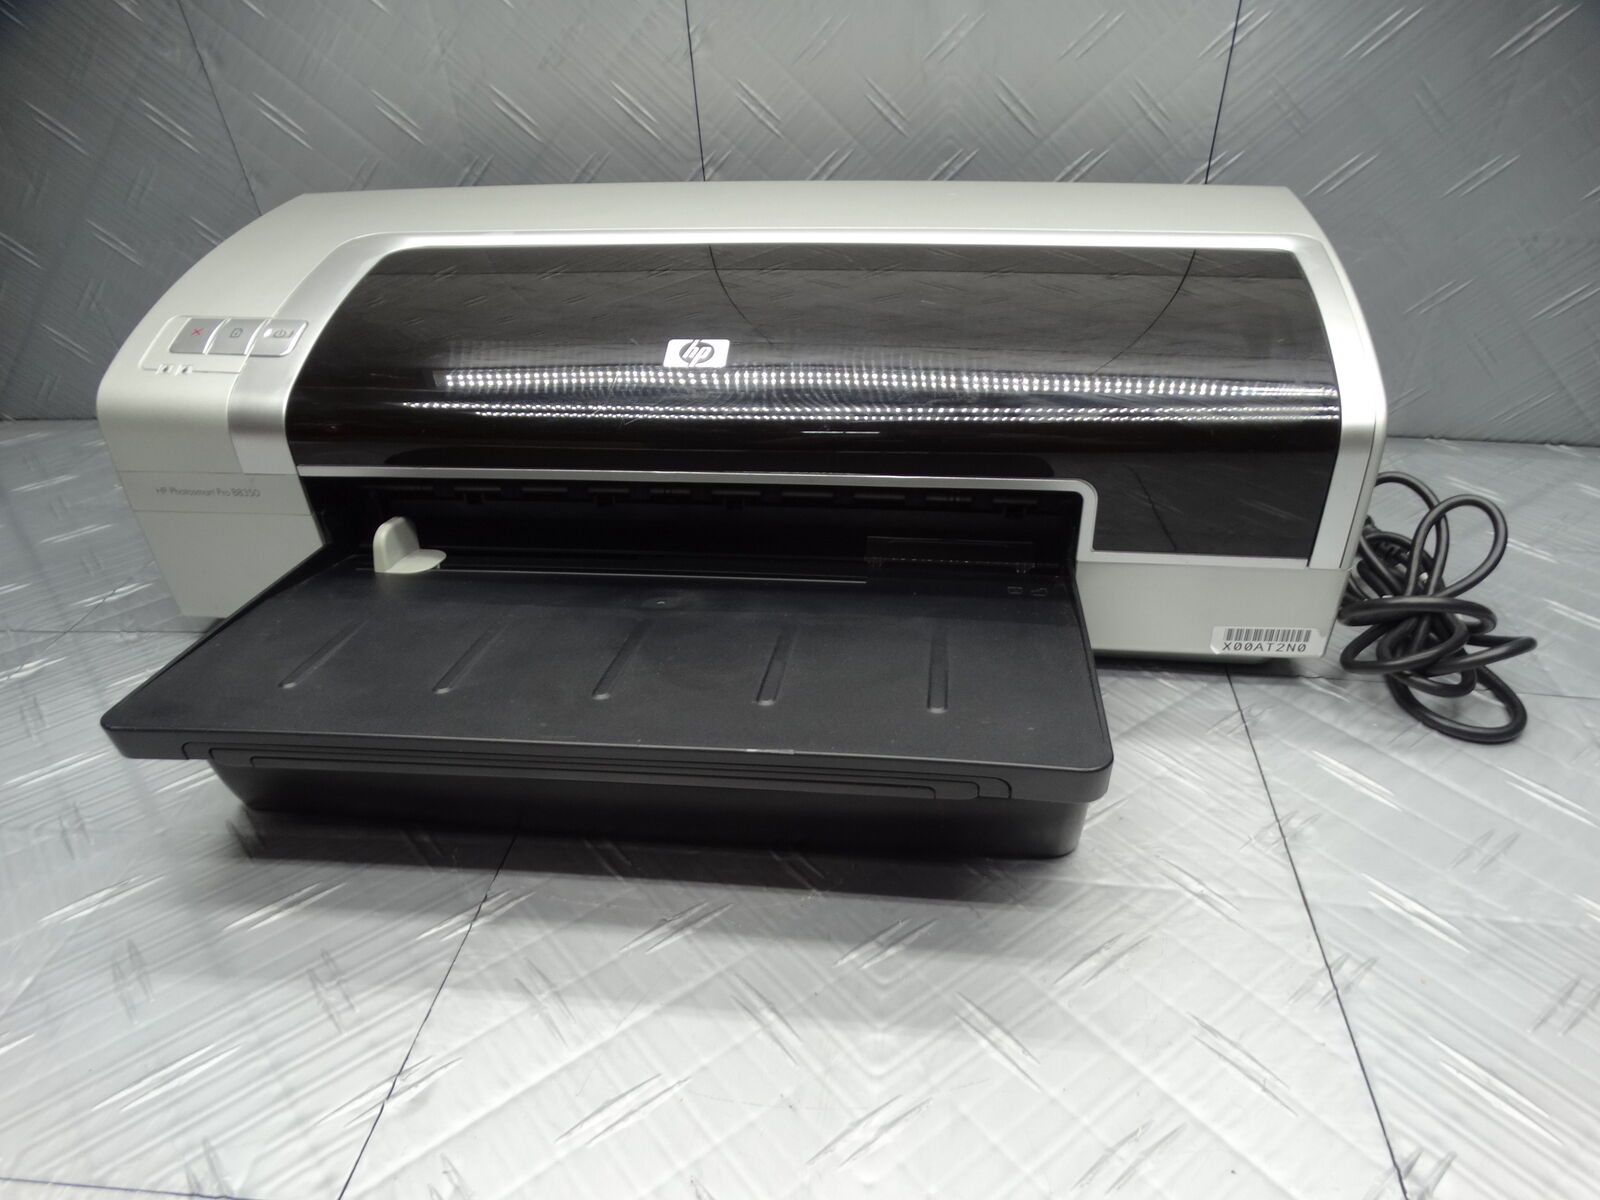 HP Photosmart Pro B8350 Digital Photo Inkjet Printer